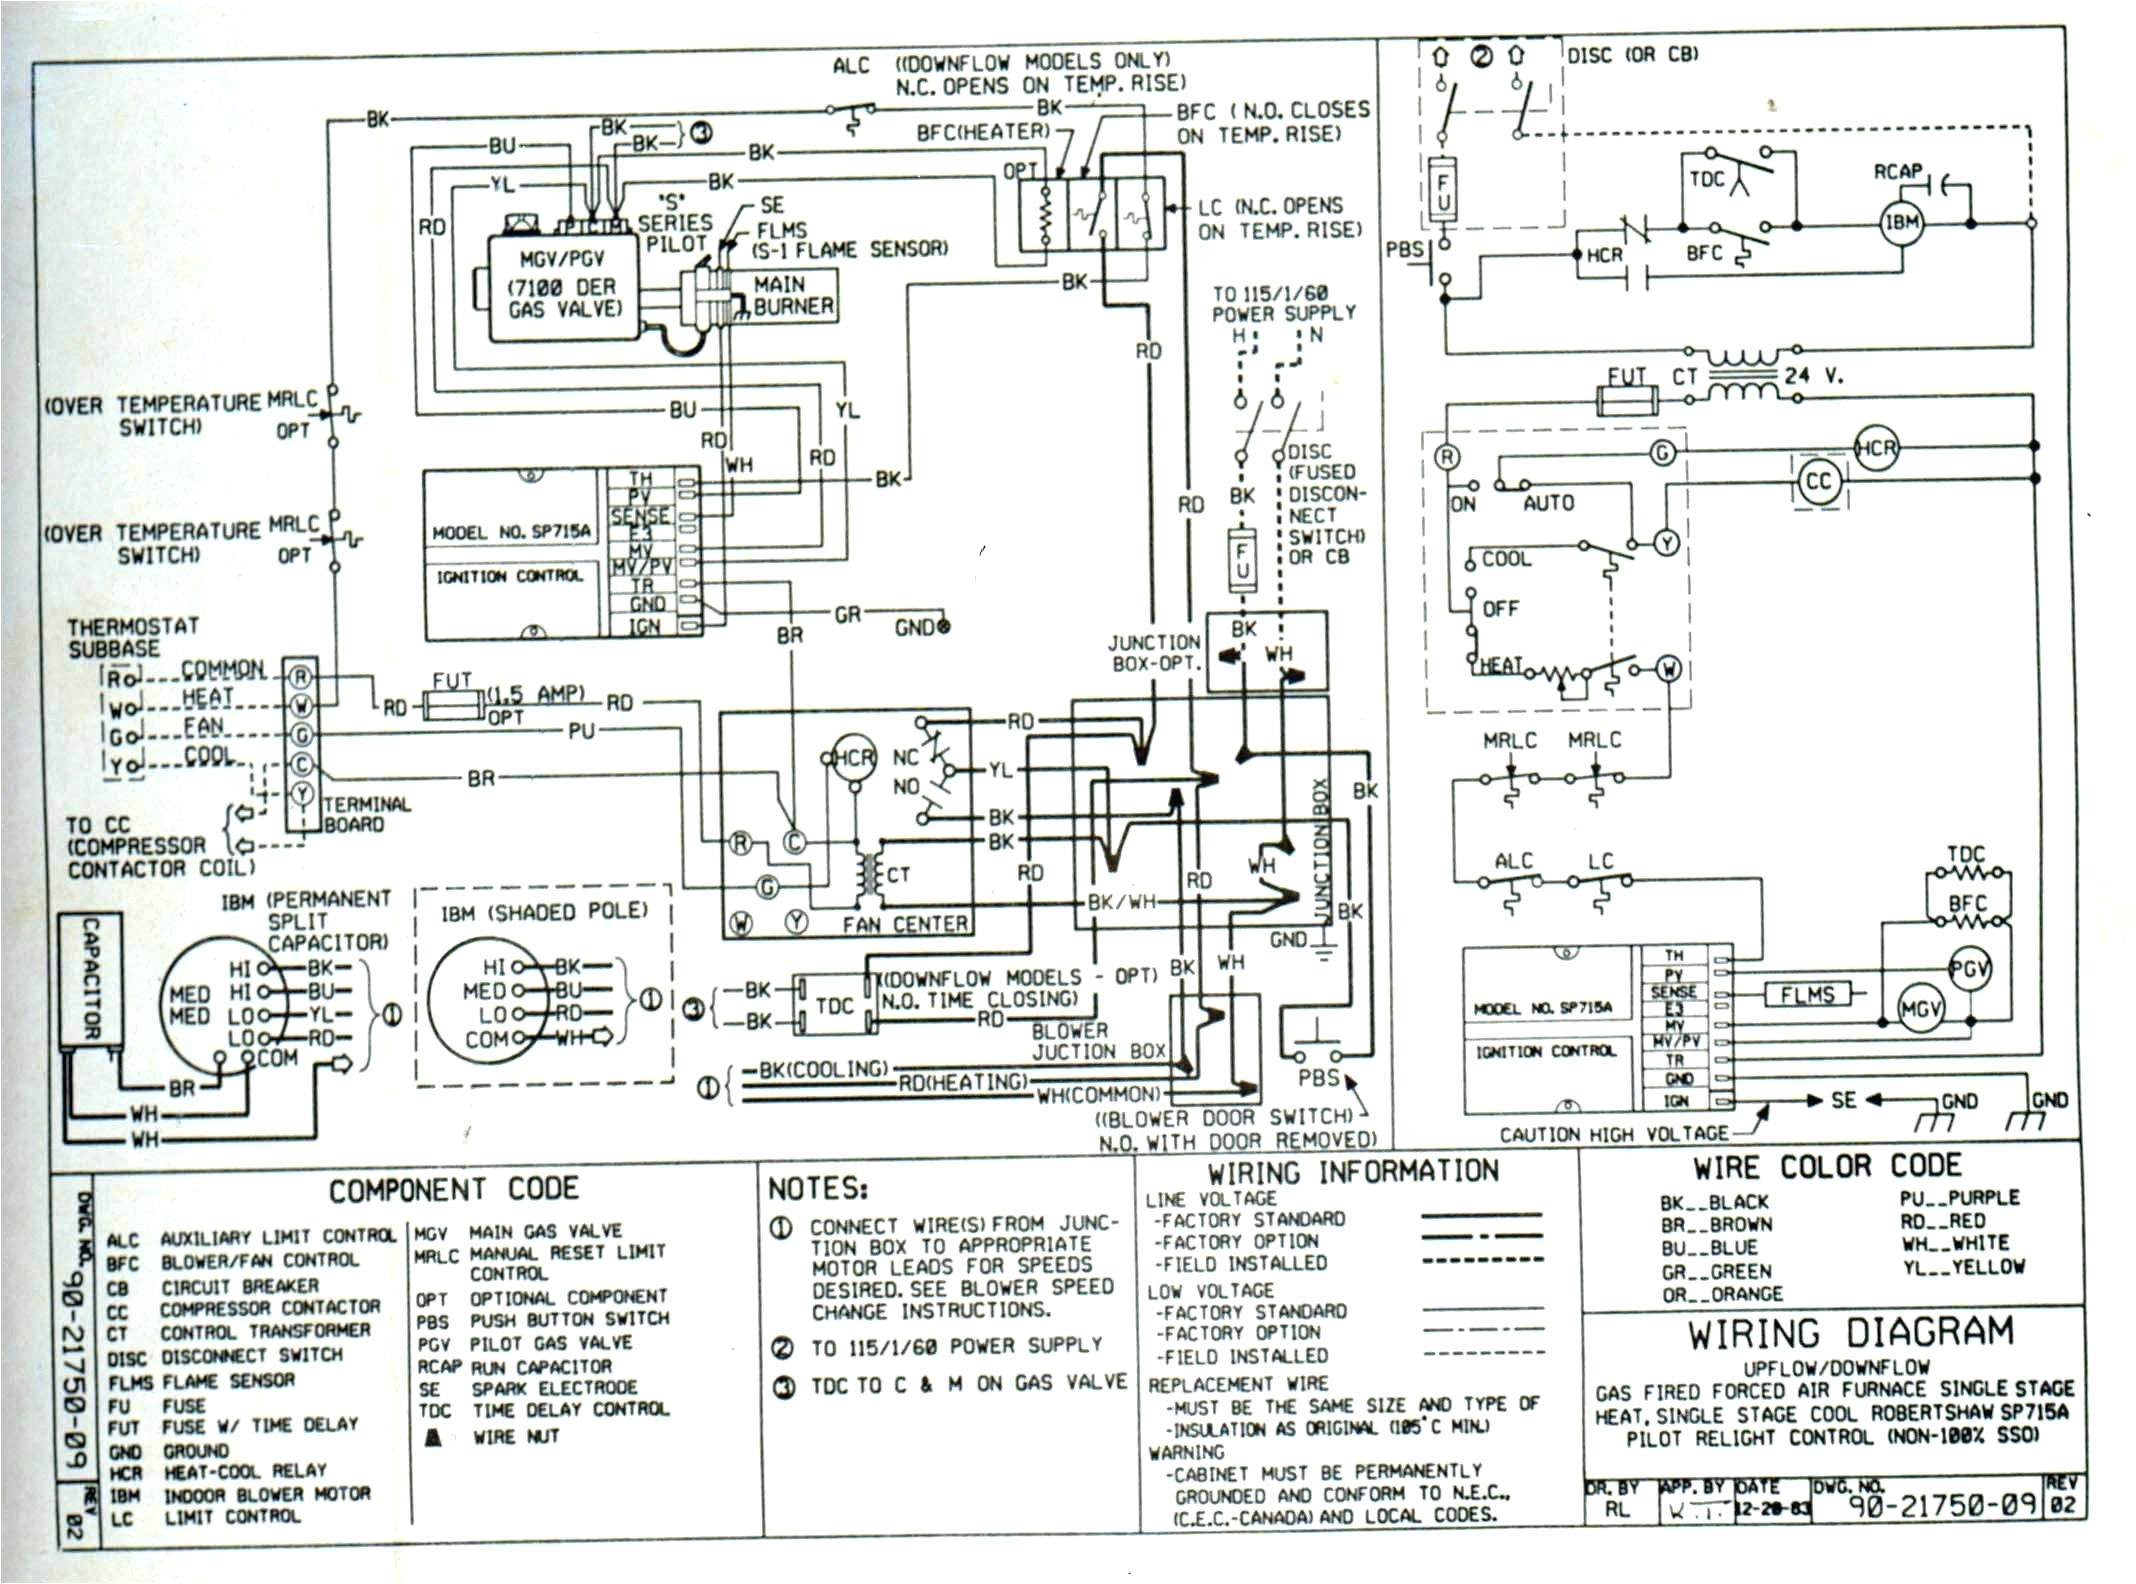 bodine electric dc motor wiring diagram bodine electric motor wiring diagram ac gear motor wiring diagram new wiring diagram electric motor 15n jpg